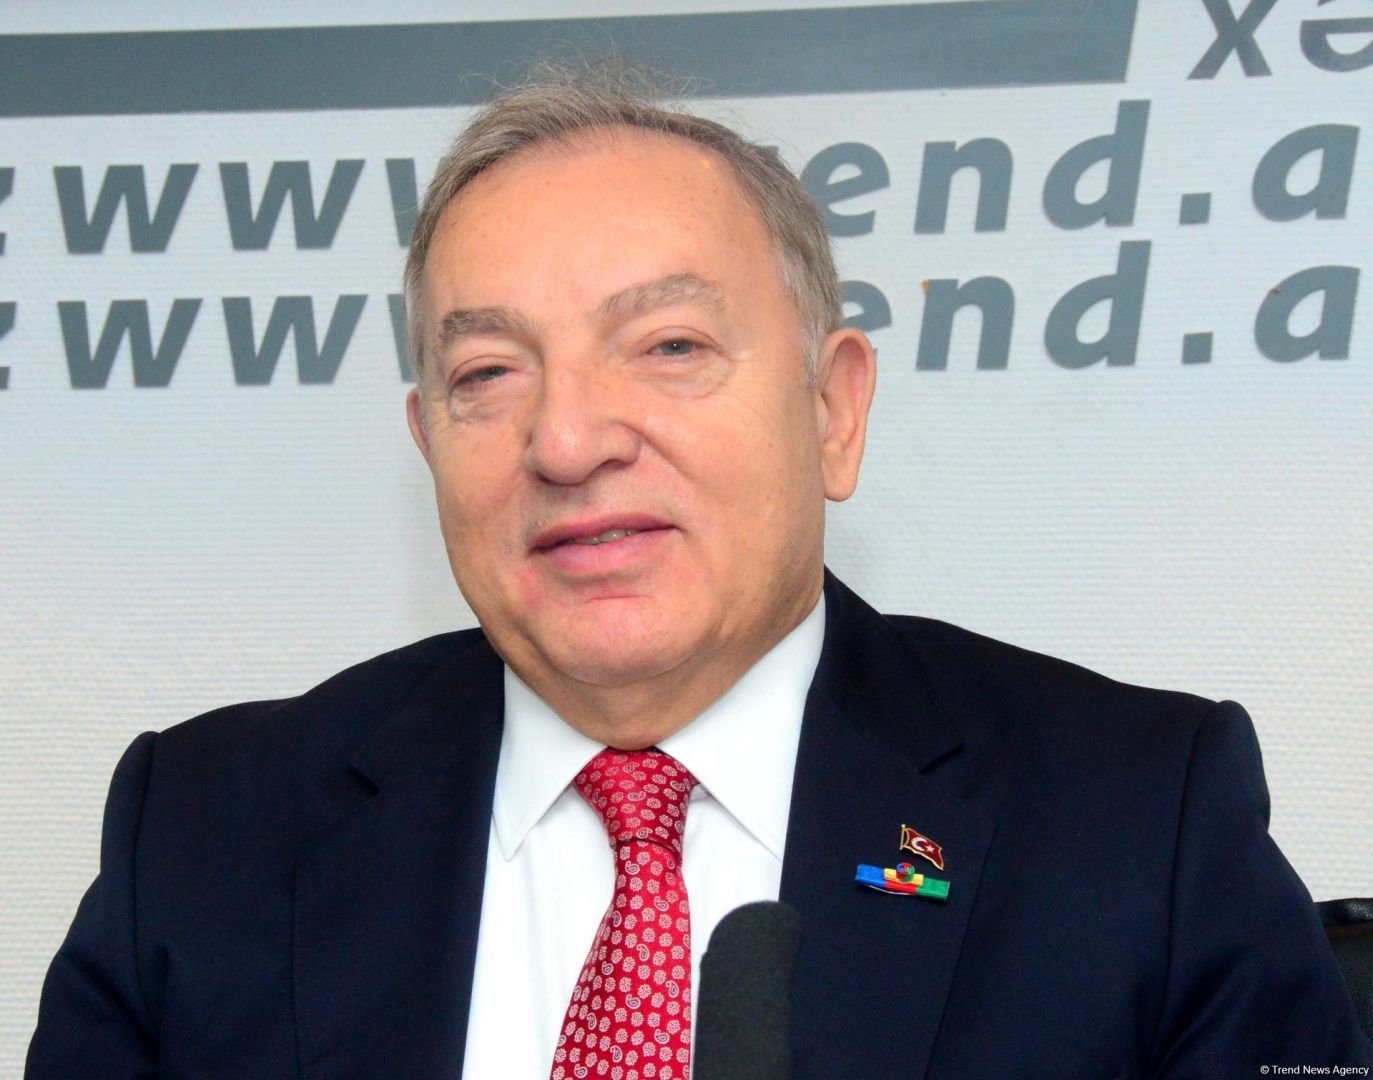 Turkic world even more united with Azerbaijan's victory - former Turkish ambassador